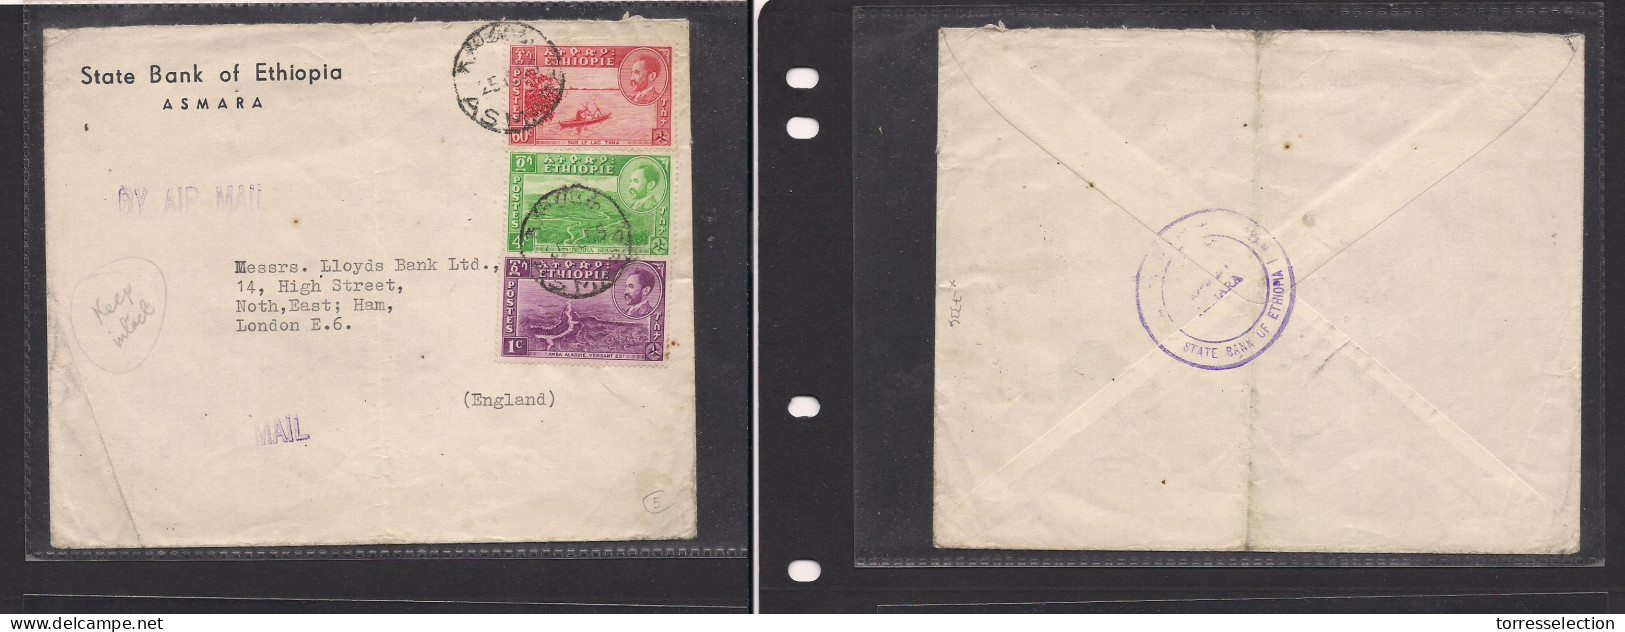 ETHIOPIA. Ethiopia Cover 1955 Asmara To UK Mult Fkd Comercial Env. Easy Deal. XSALE. - Äthiopien